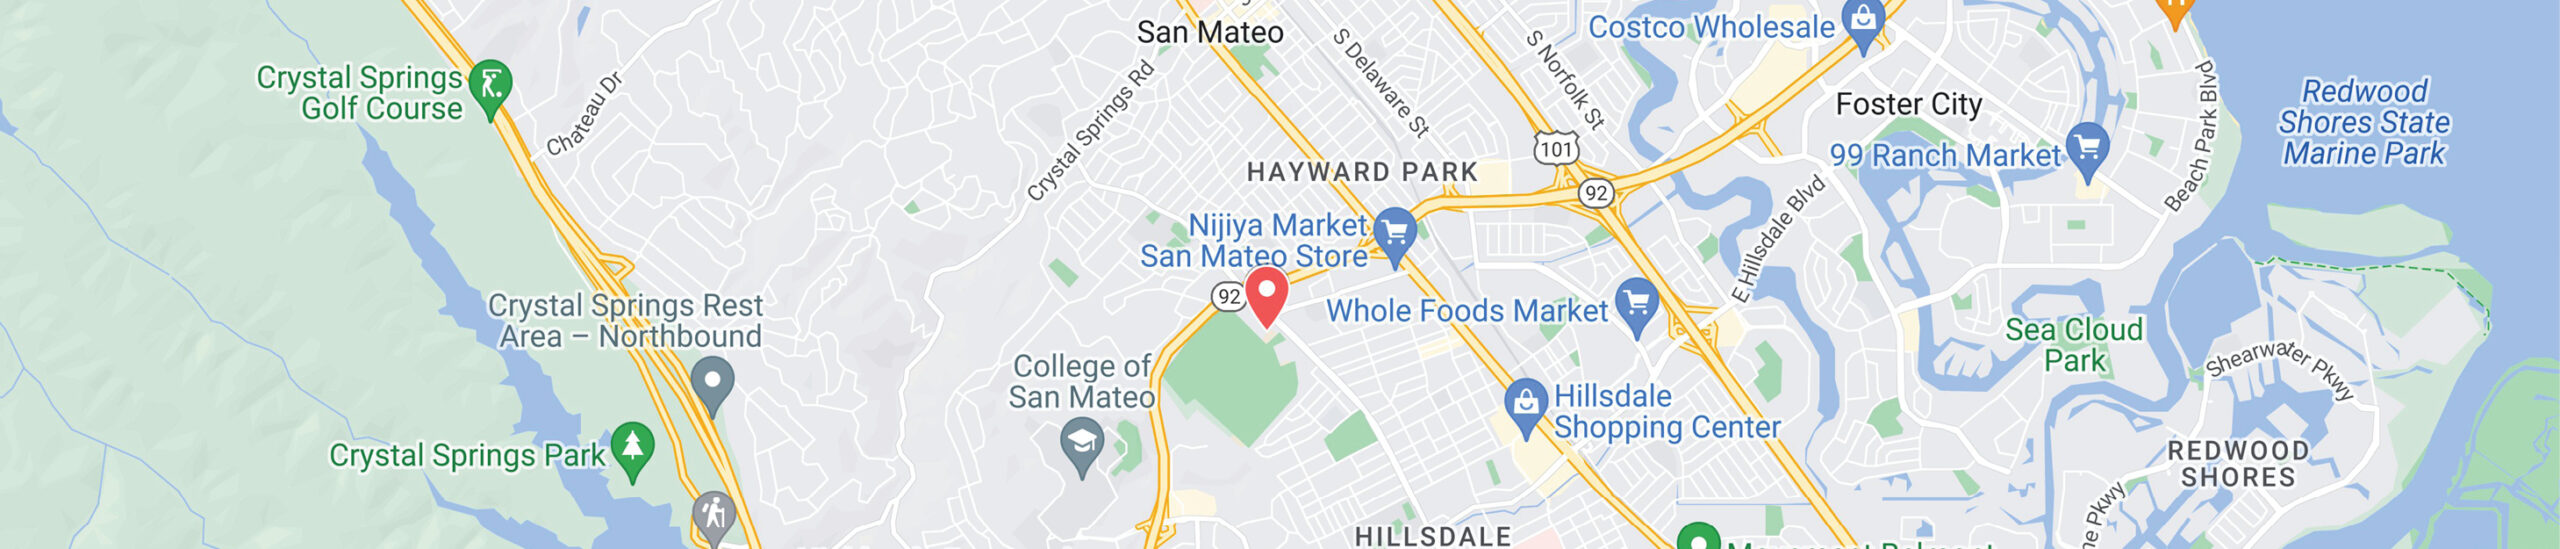 San Francisco Bay Area Office Location